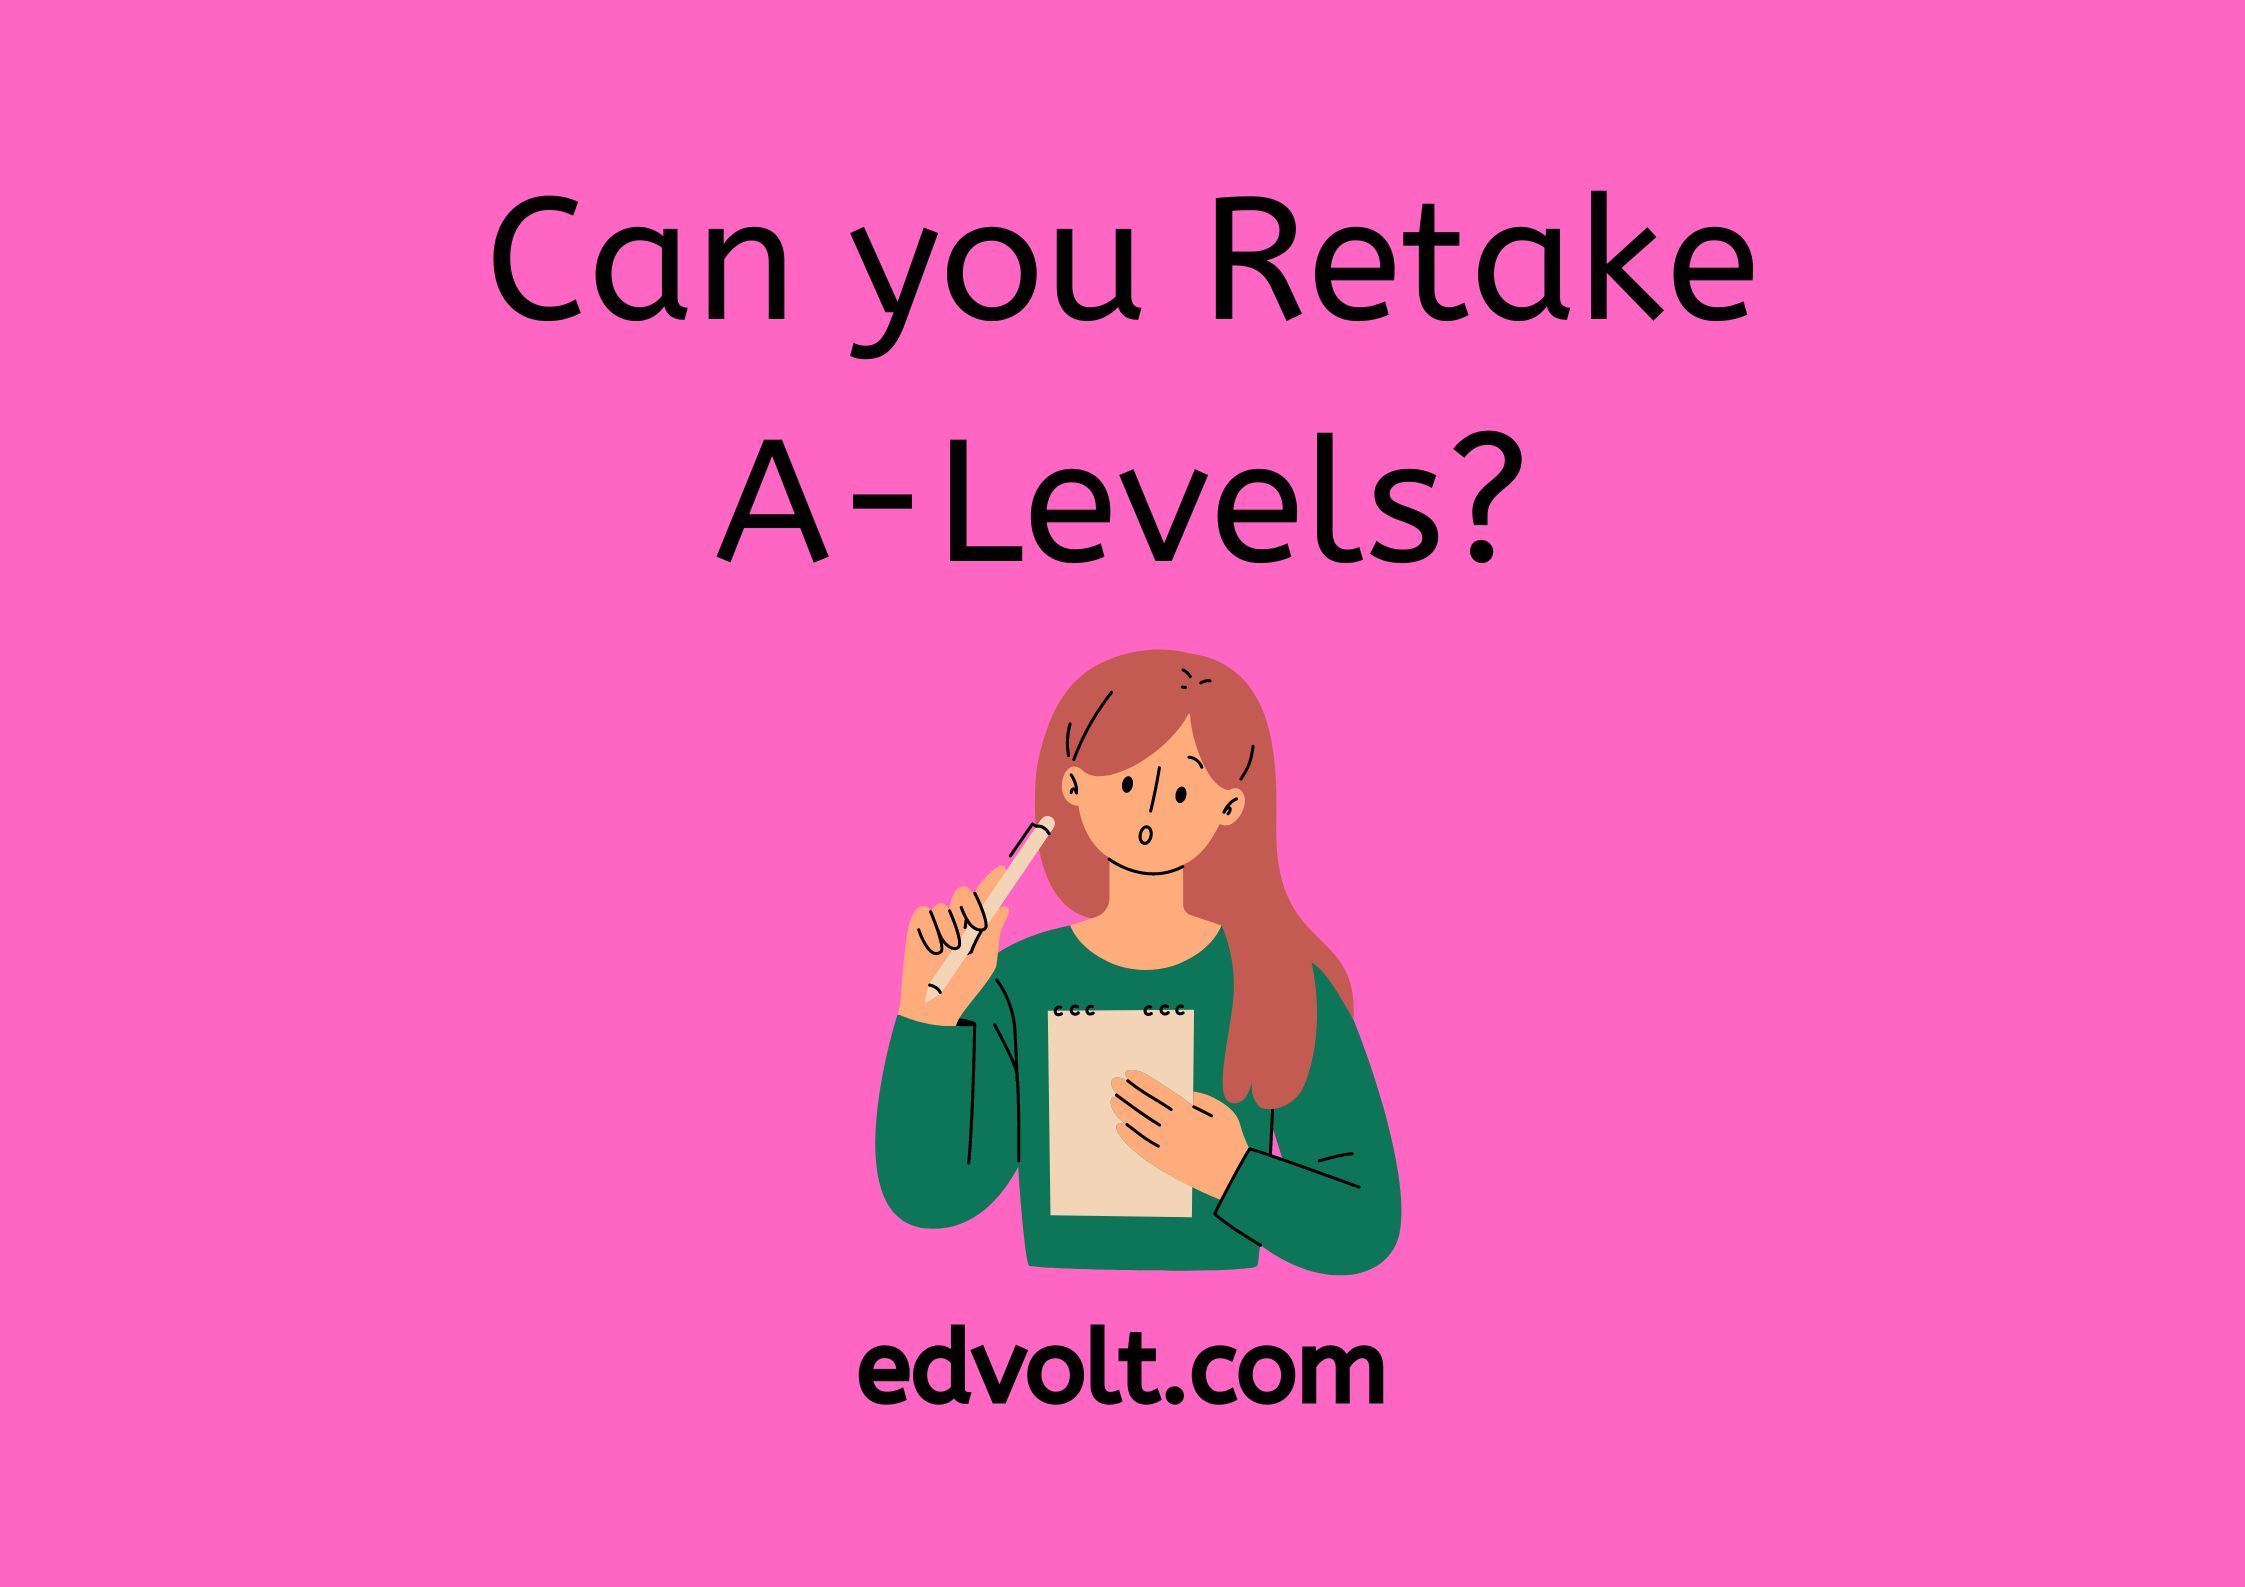 Can you Retake A-Levels?